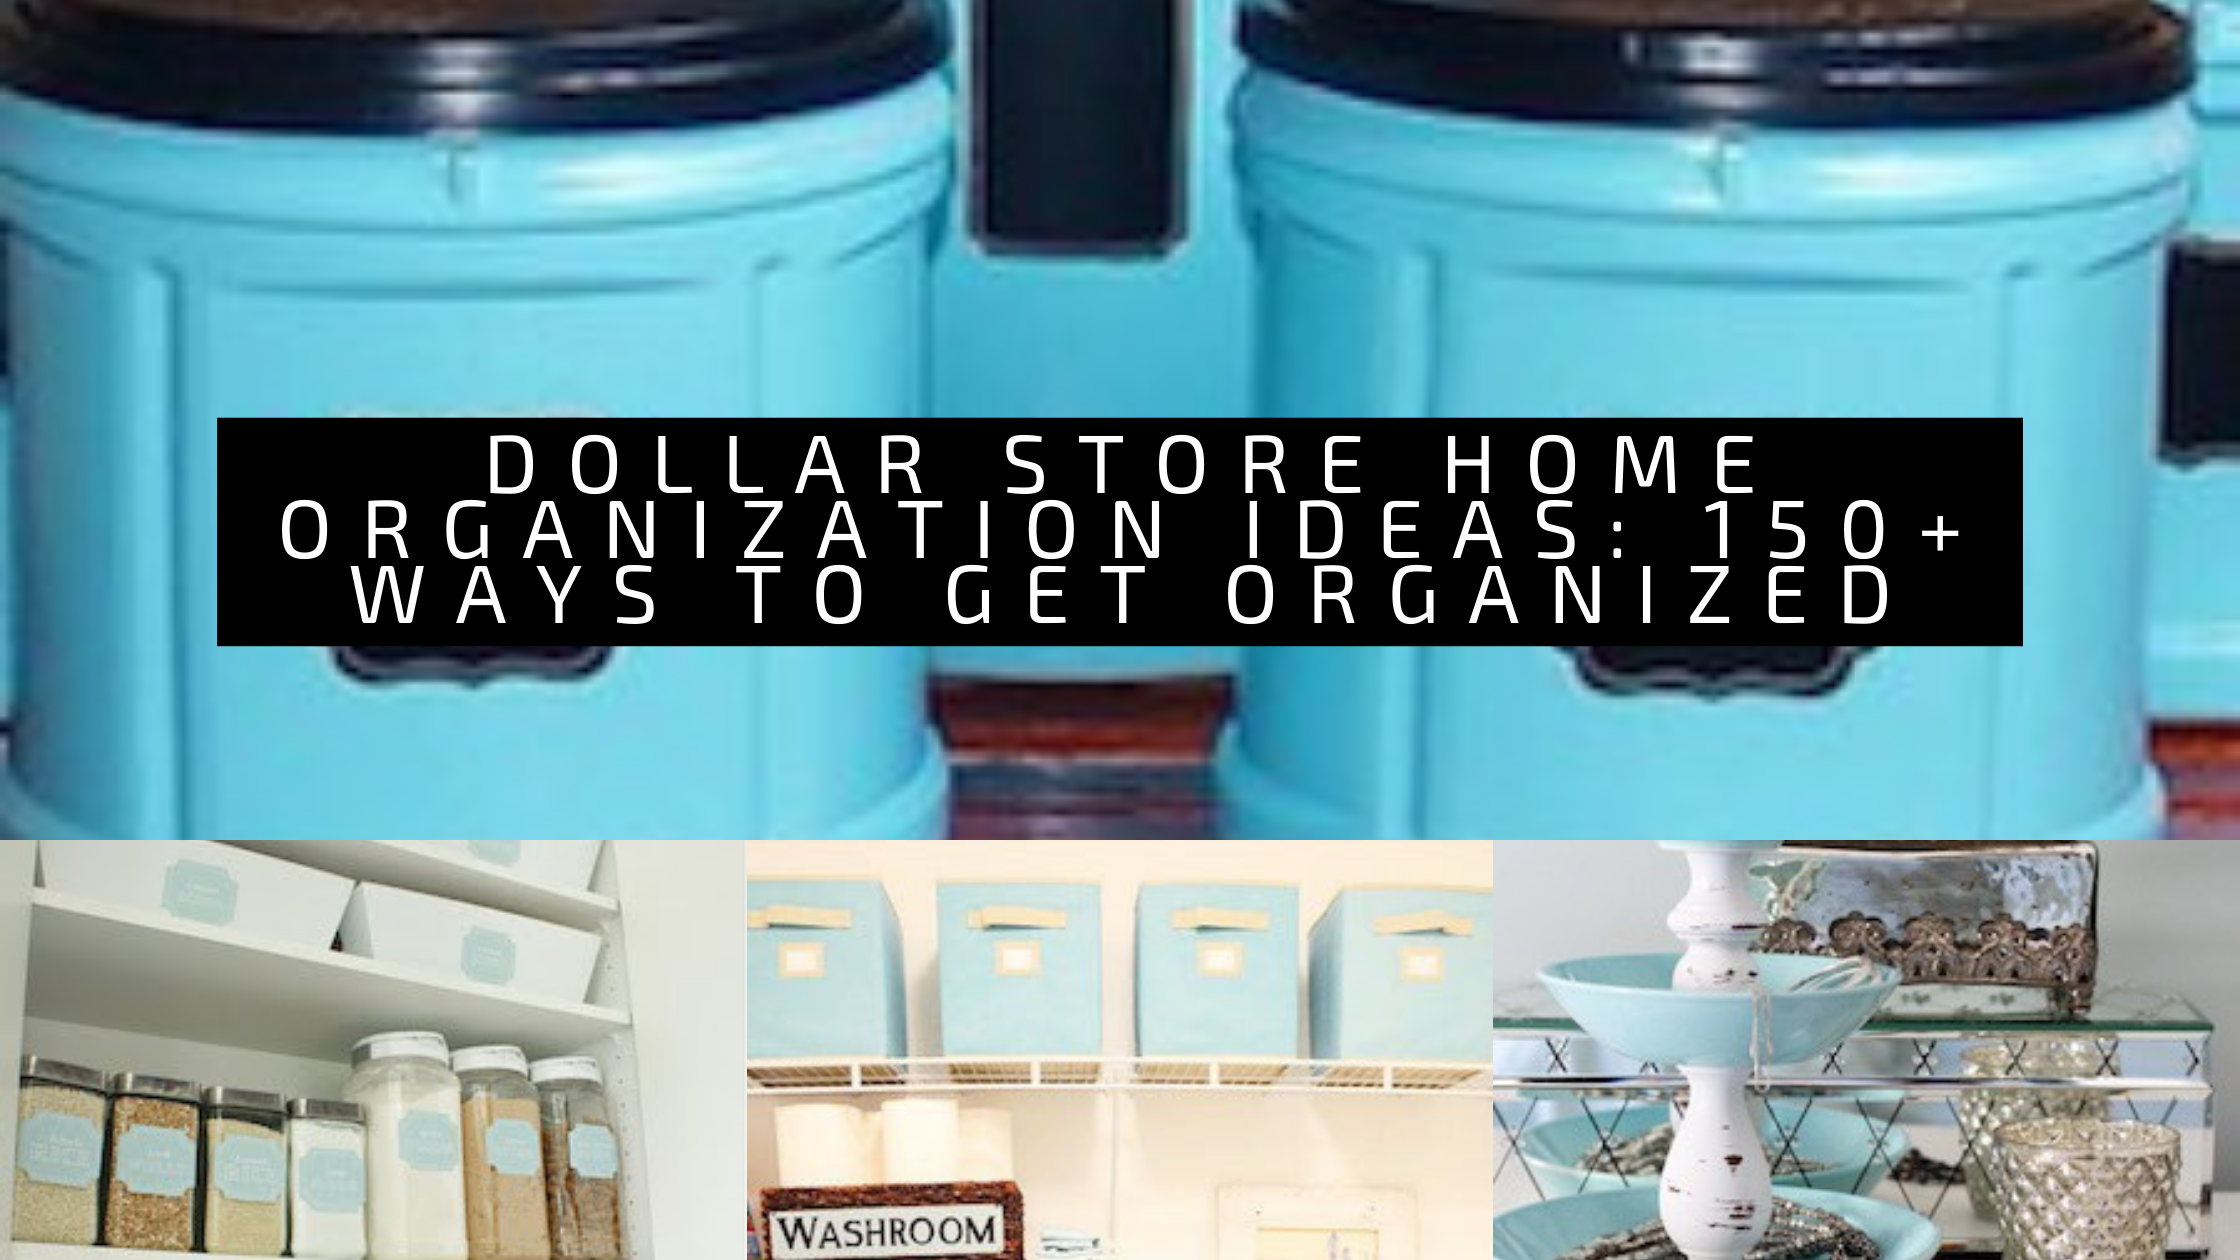 Dollar Store Home Organization Ideas: 150+ Ways to Get Organized 30